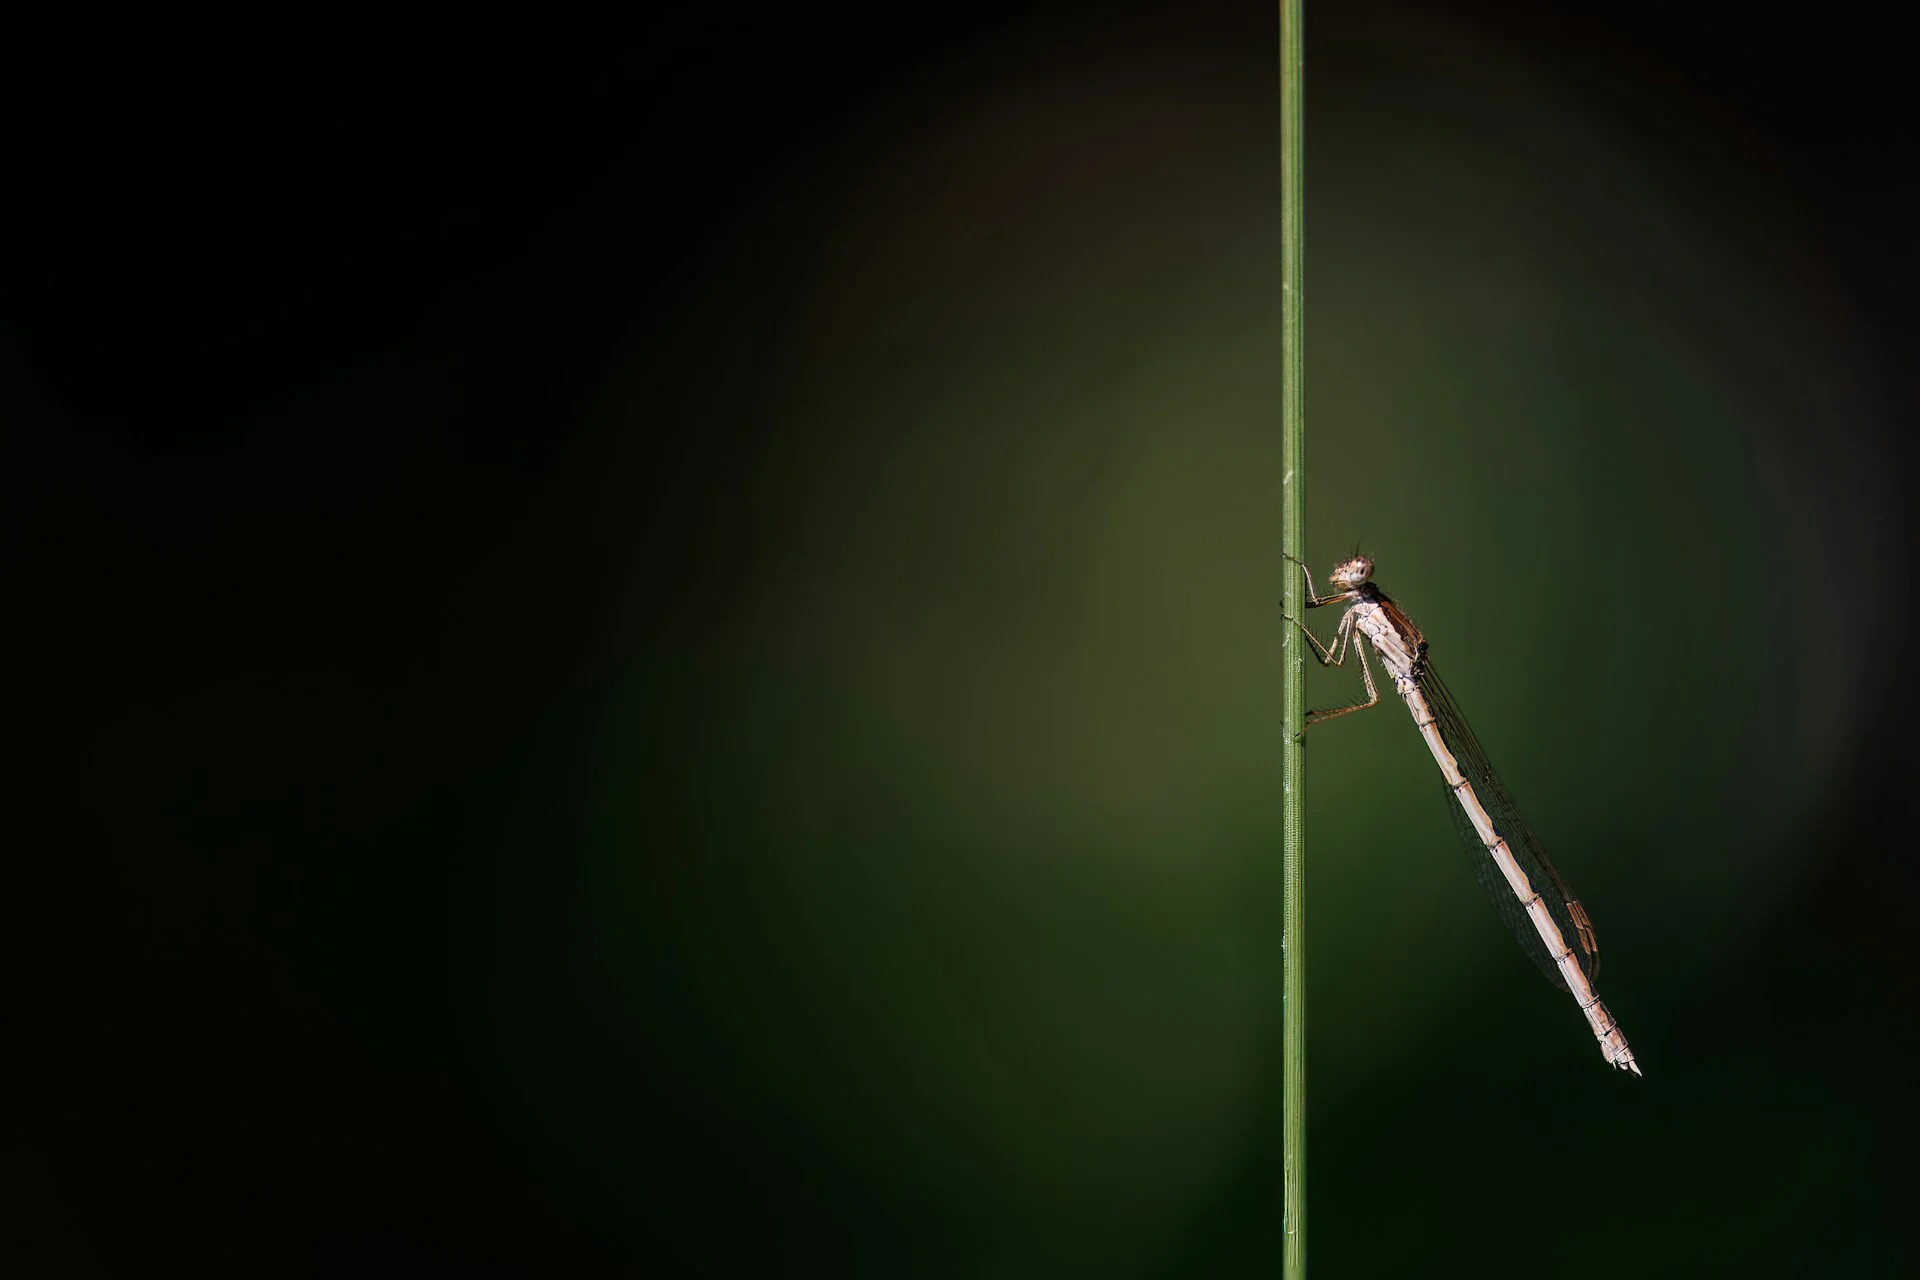 A bug is sitting on a green stem